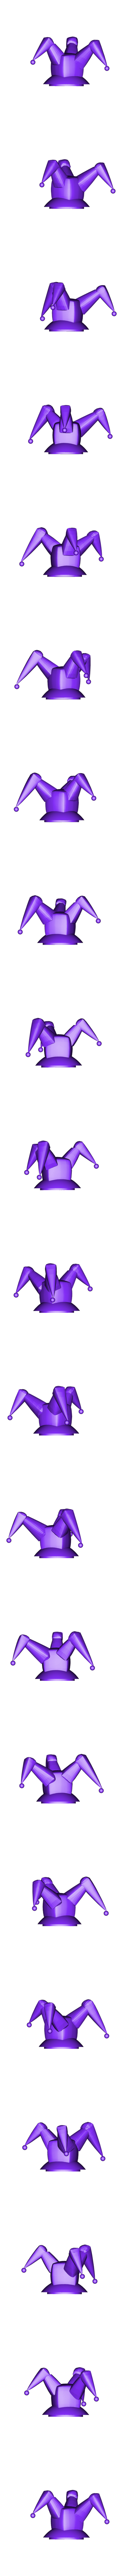 tirelire oeuf joker couvercle.stl Download free STL file Piggy bank "joker egg" • 3D printable model, psl